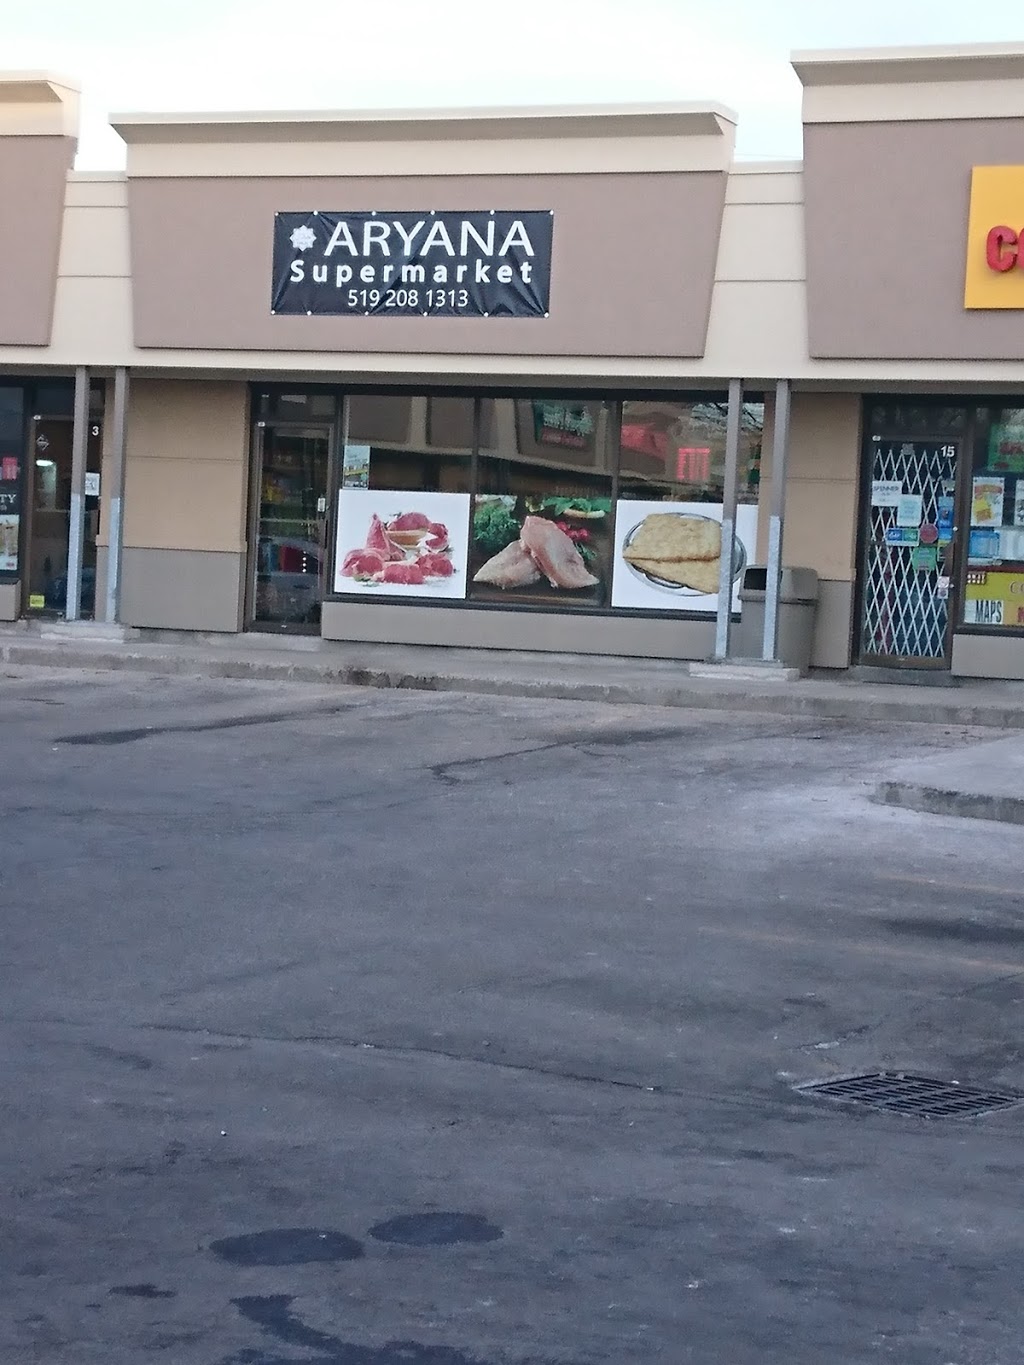 Aryana Supermarket | store | 324 Highland Rd W unit 4, Kitchener, ON N2M 5G2, Canada | 5192081313 OR +1 519-208-1313